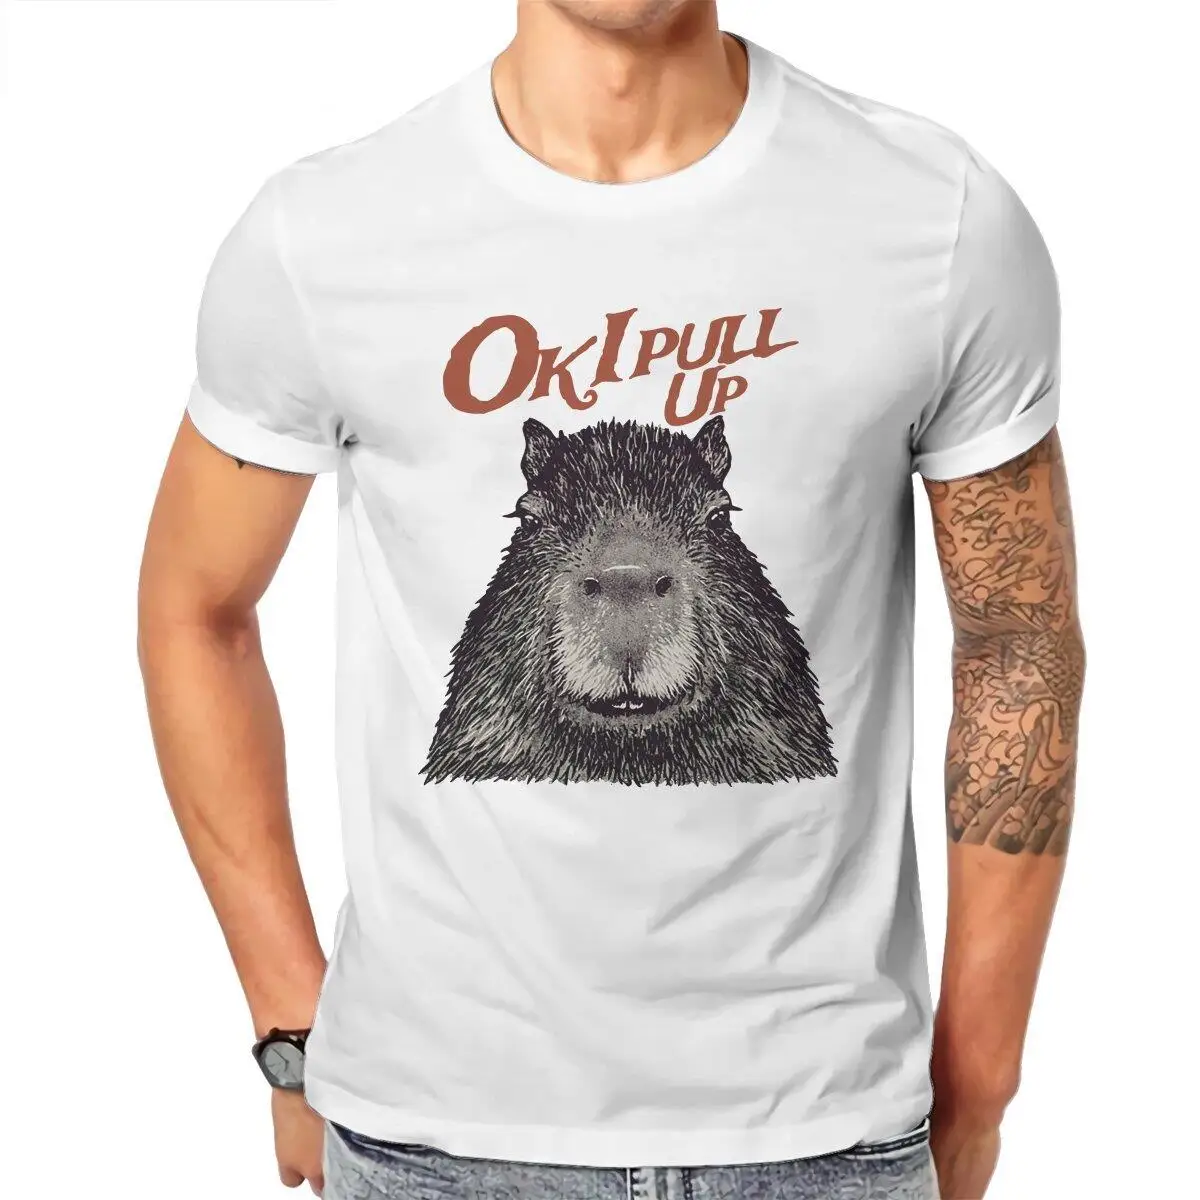 Capybara Ok I Pull Up  Men's T Shirt  Unique Tees Short Sleeve O Neck T-Shirt Cotton Big Size Clothes